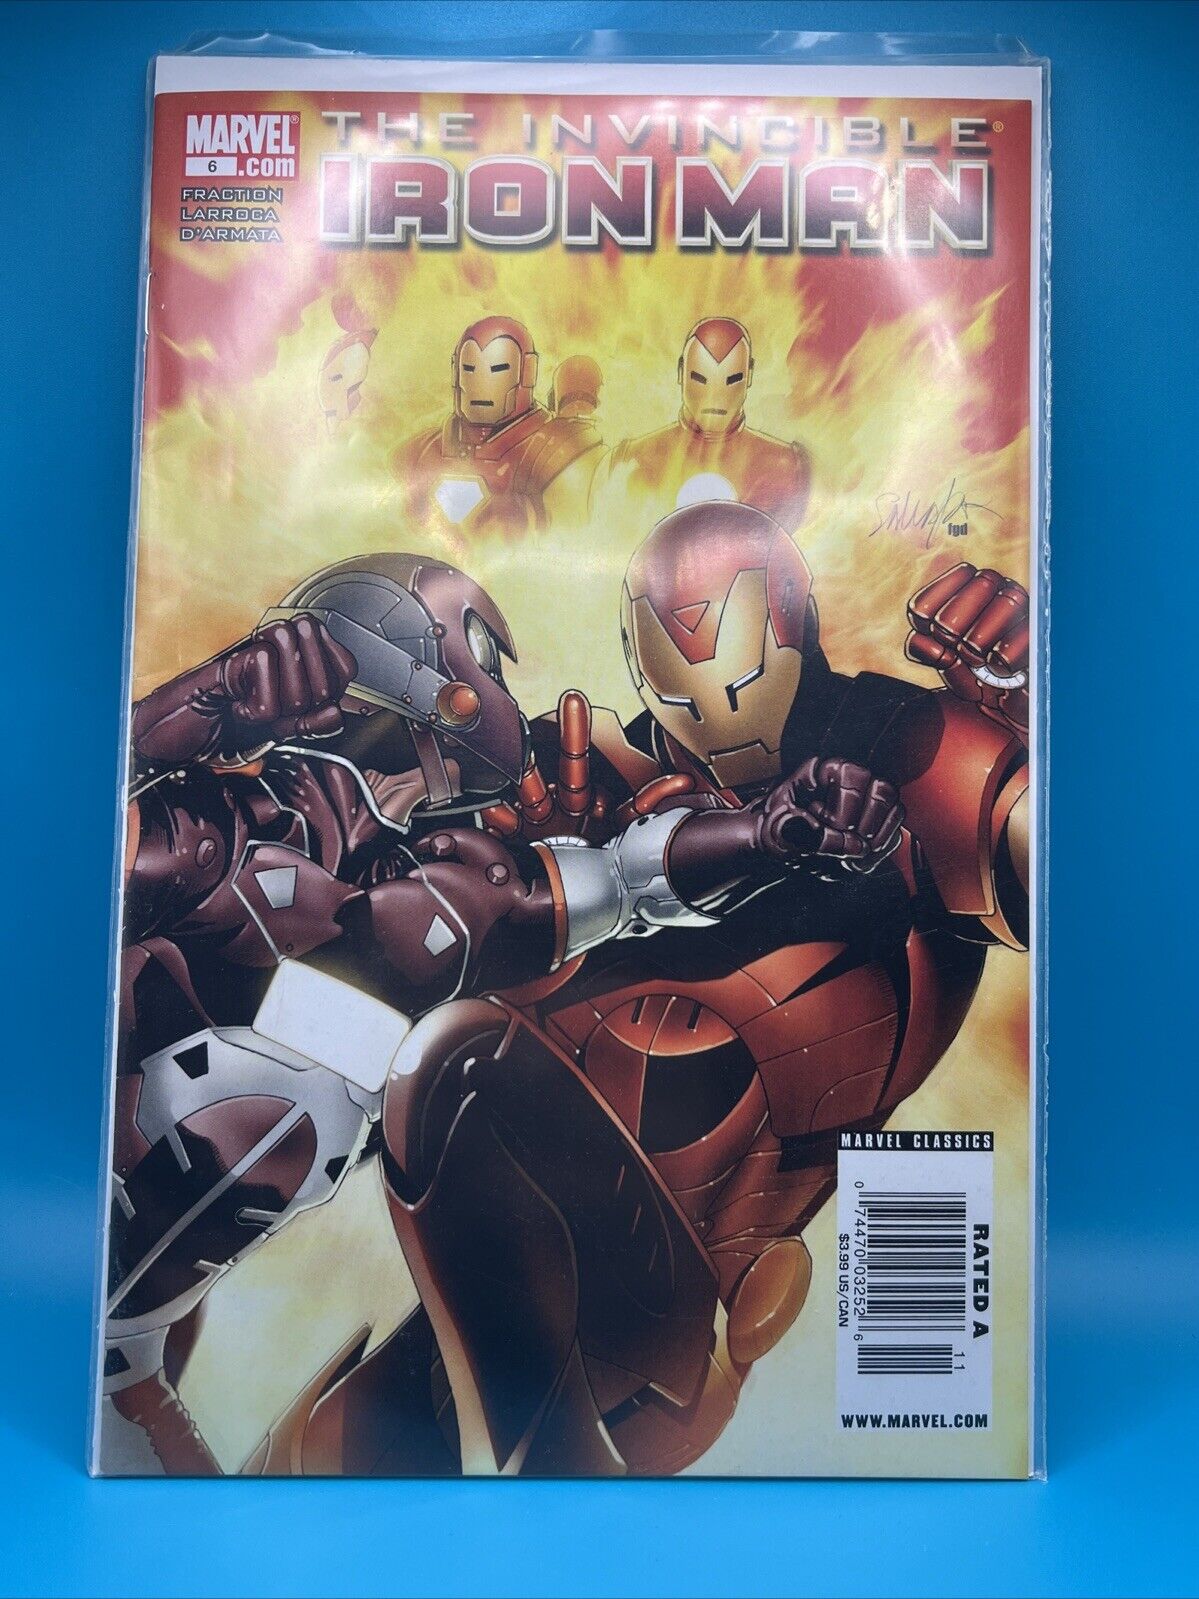 The Invincible Iron Man #6 (Marvel Comics September 2009)